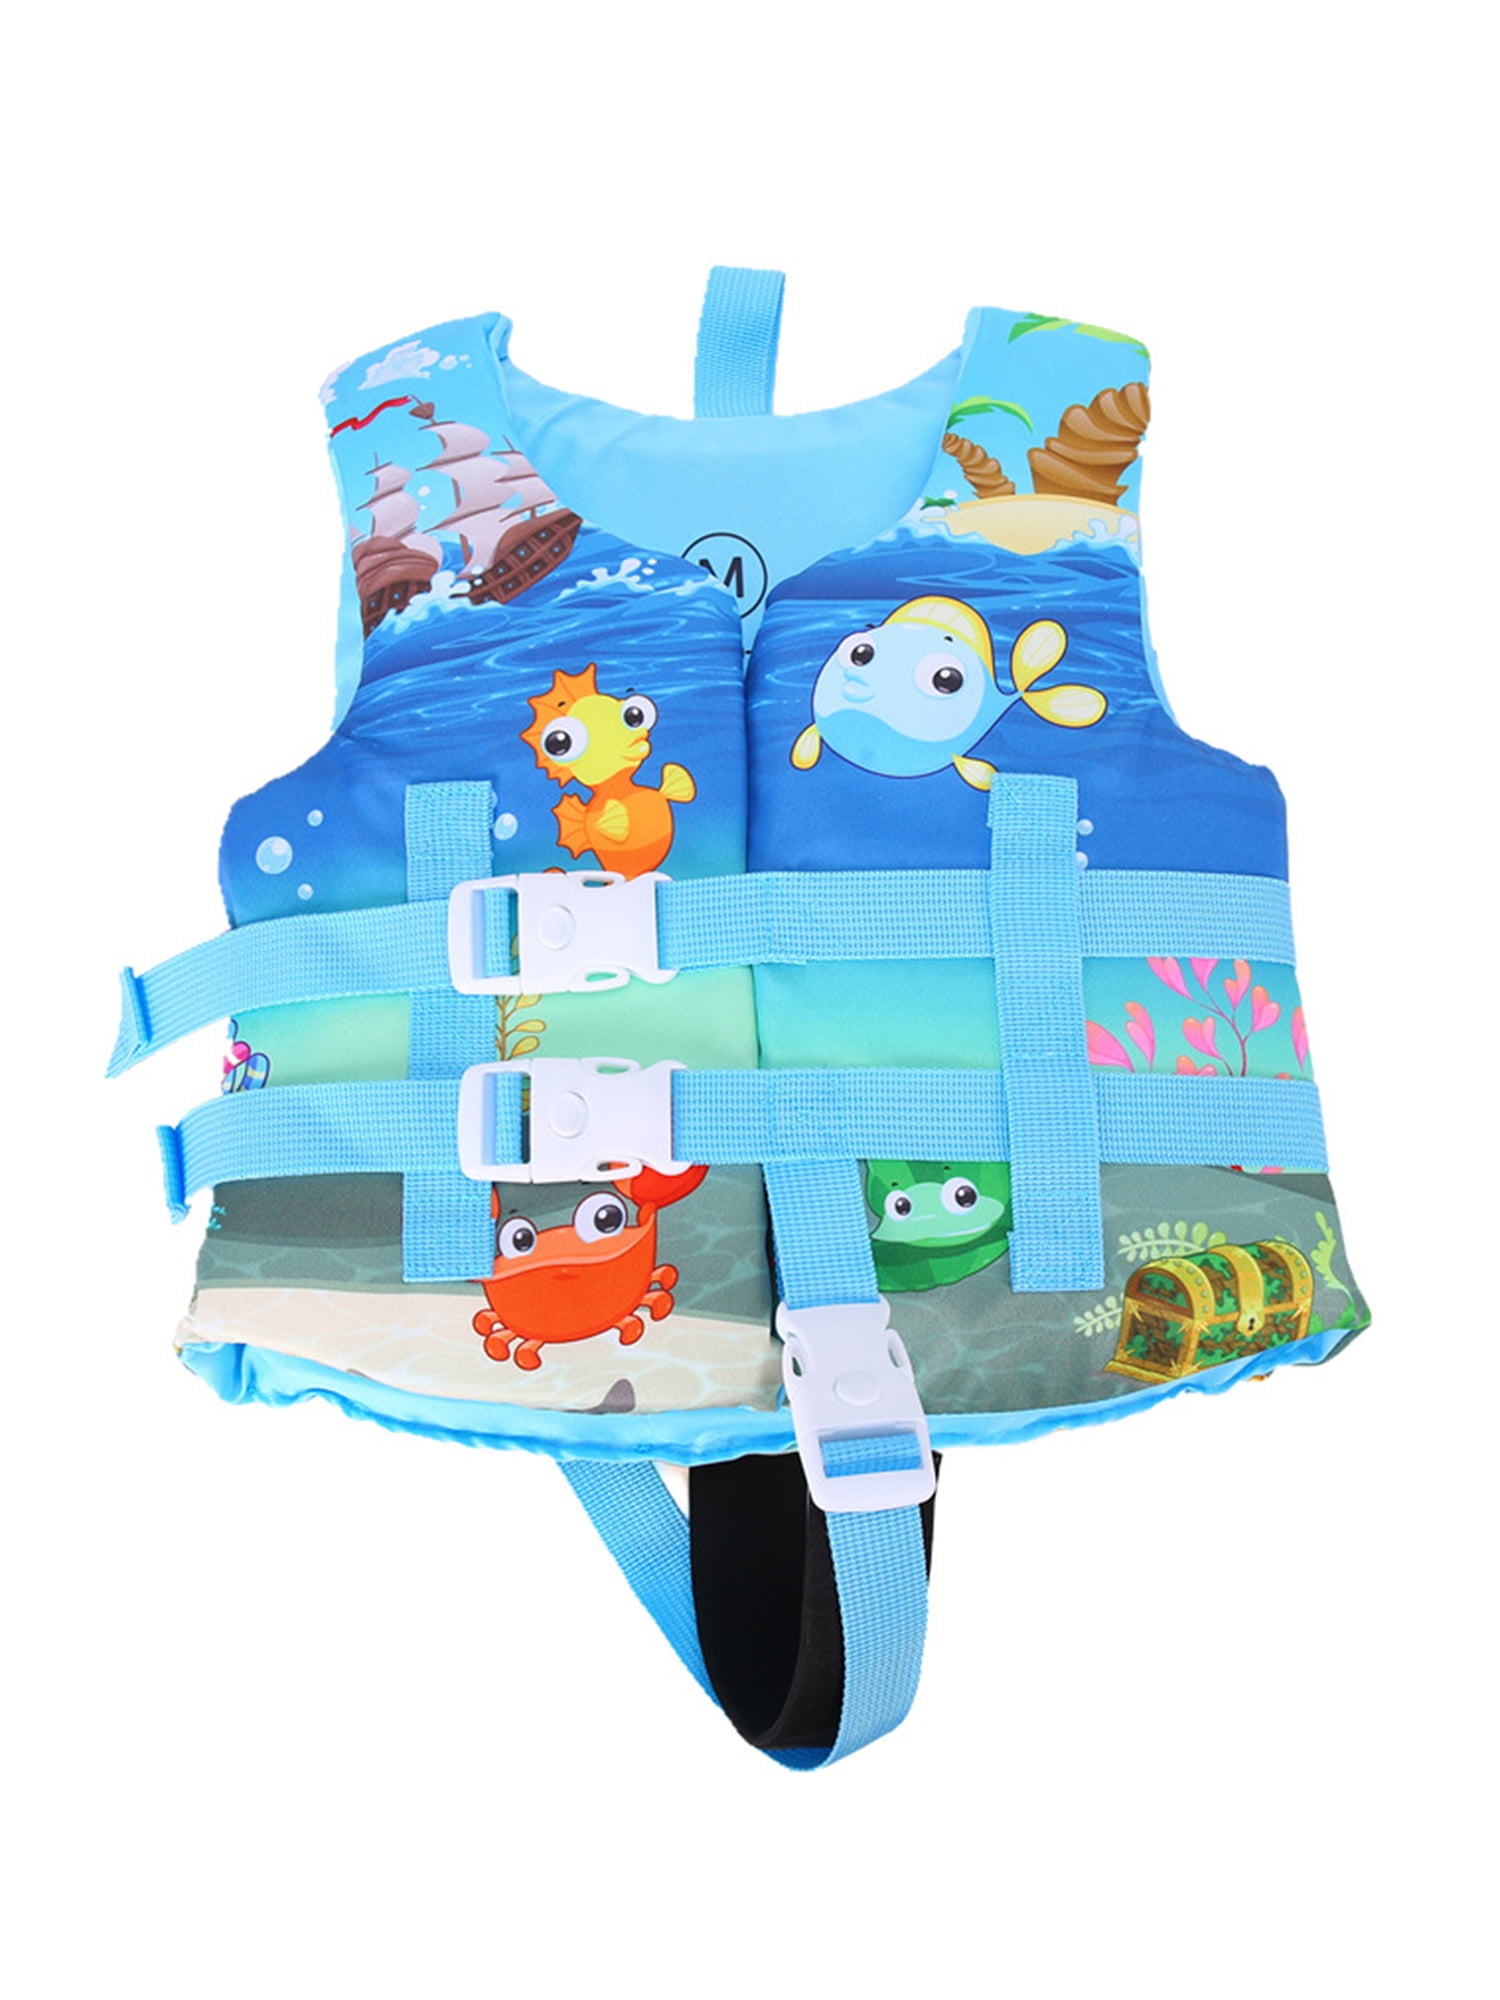 Jyyybf Kids Swimming Life Vest Cartoon Animals Print Flotage Life Jacket with Lockable Buckles for Girls Boys Pink Unicorn 4-8 Years